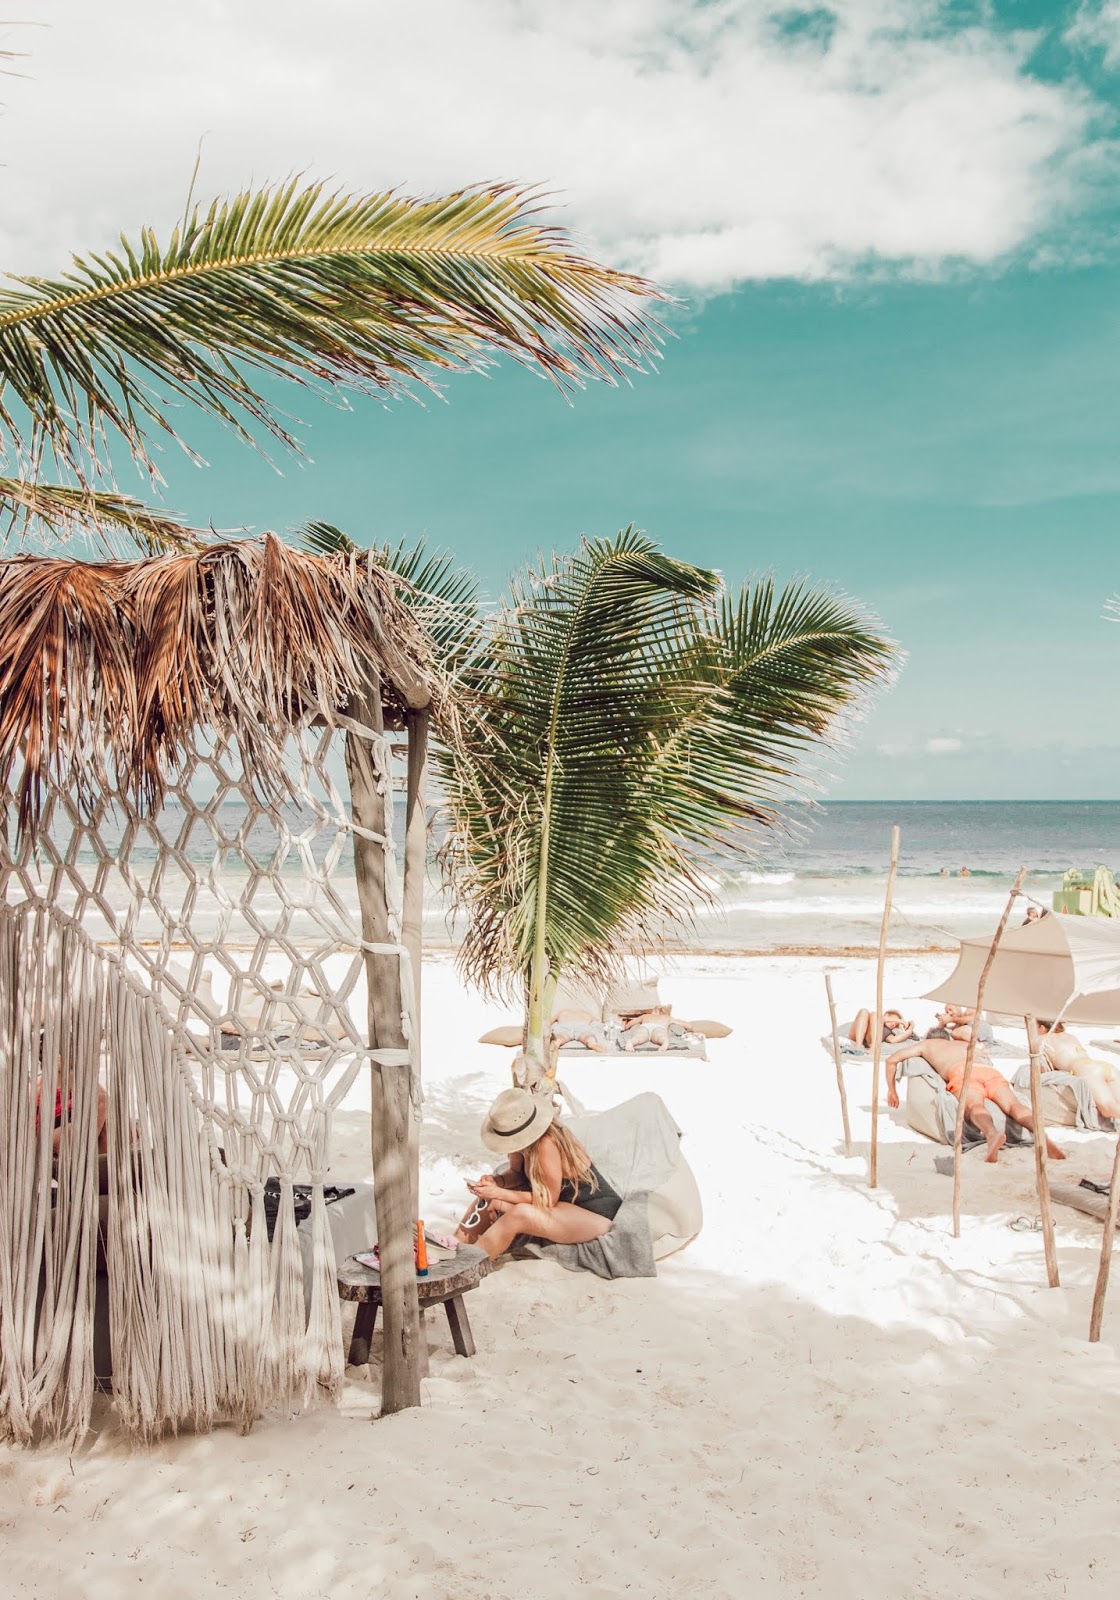 Tulum, Mexico Travel Guide: 11 Fabulous Beach Clubs